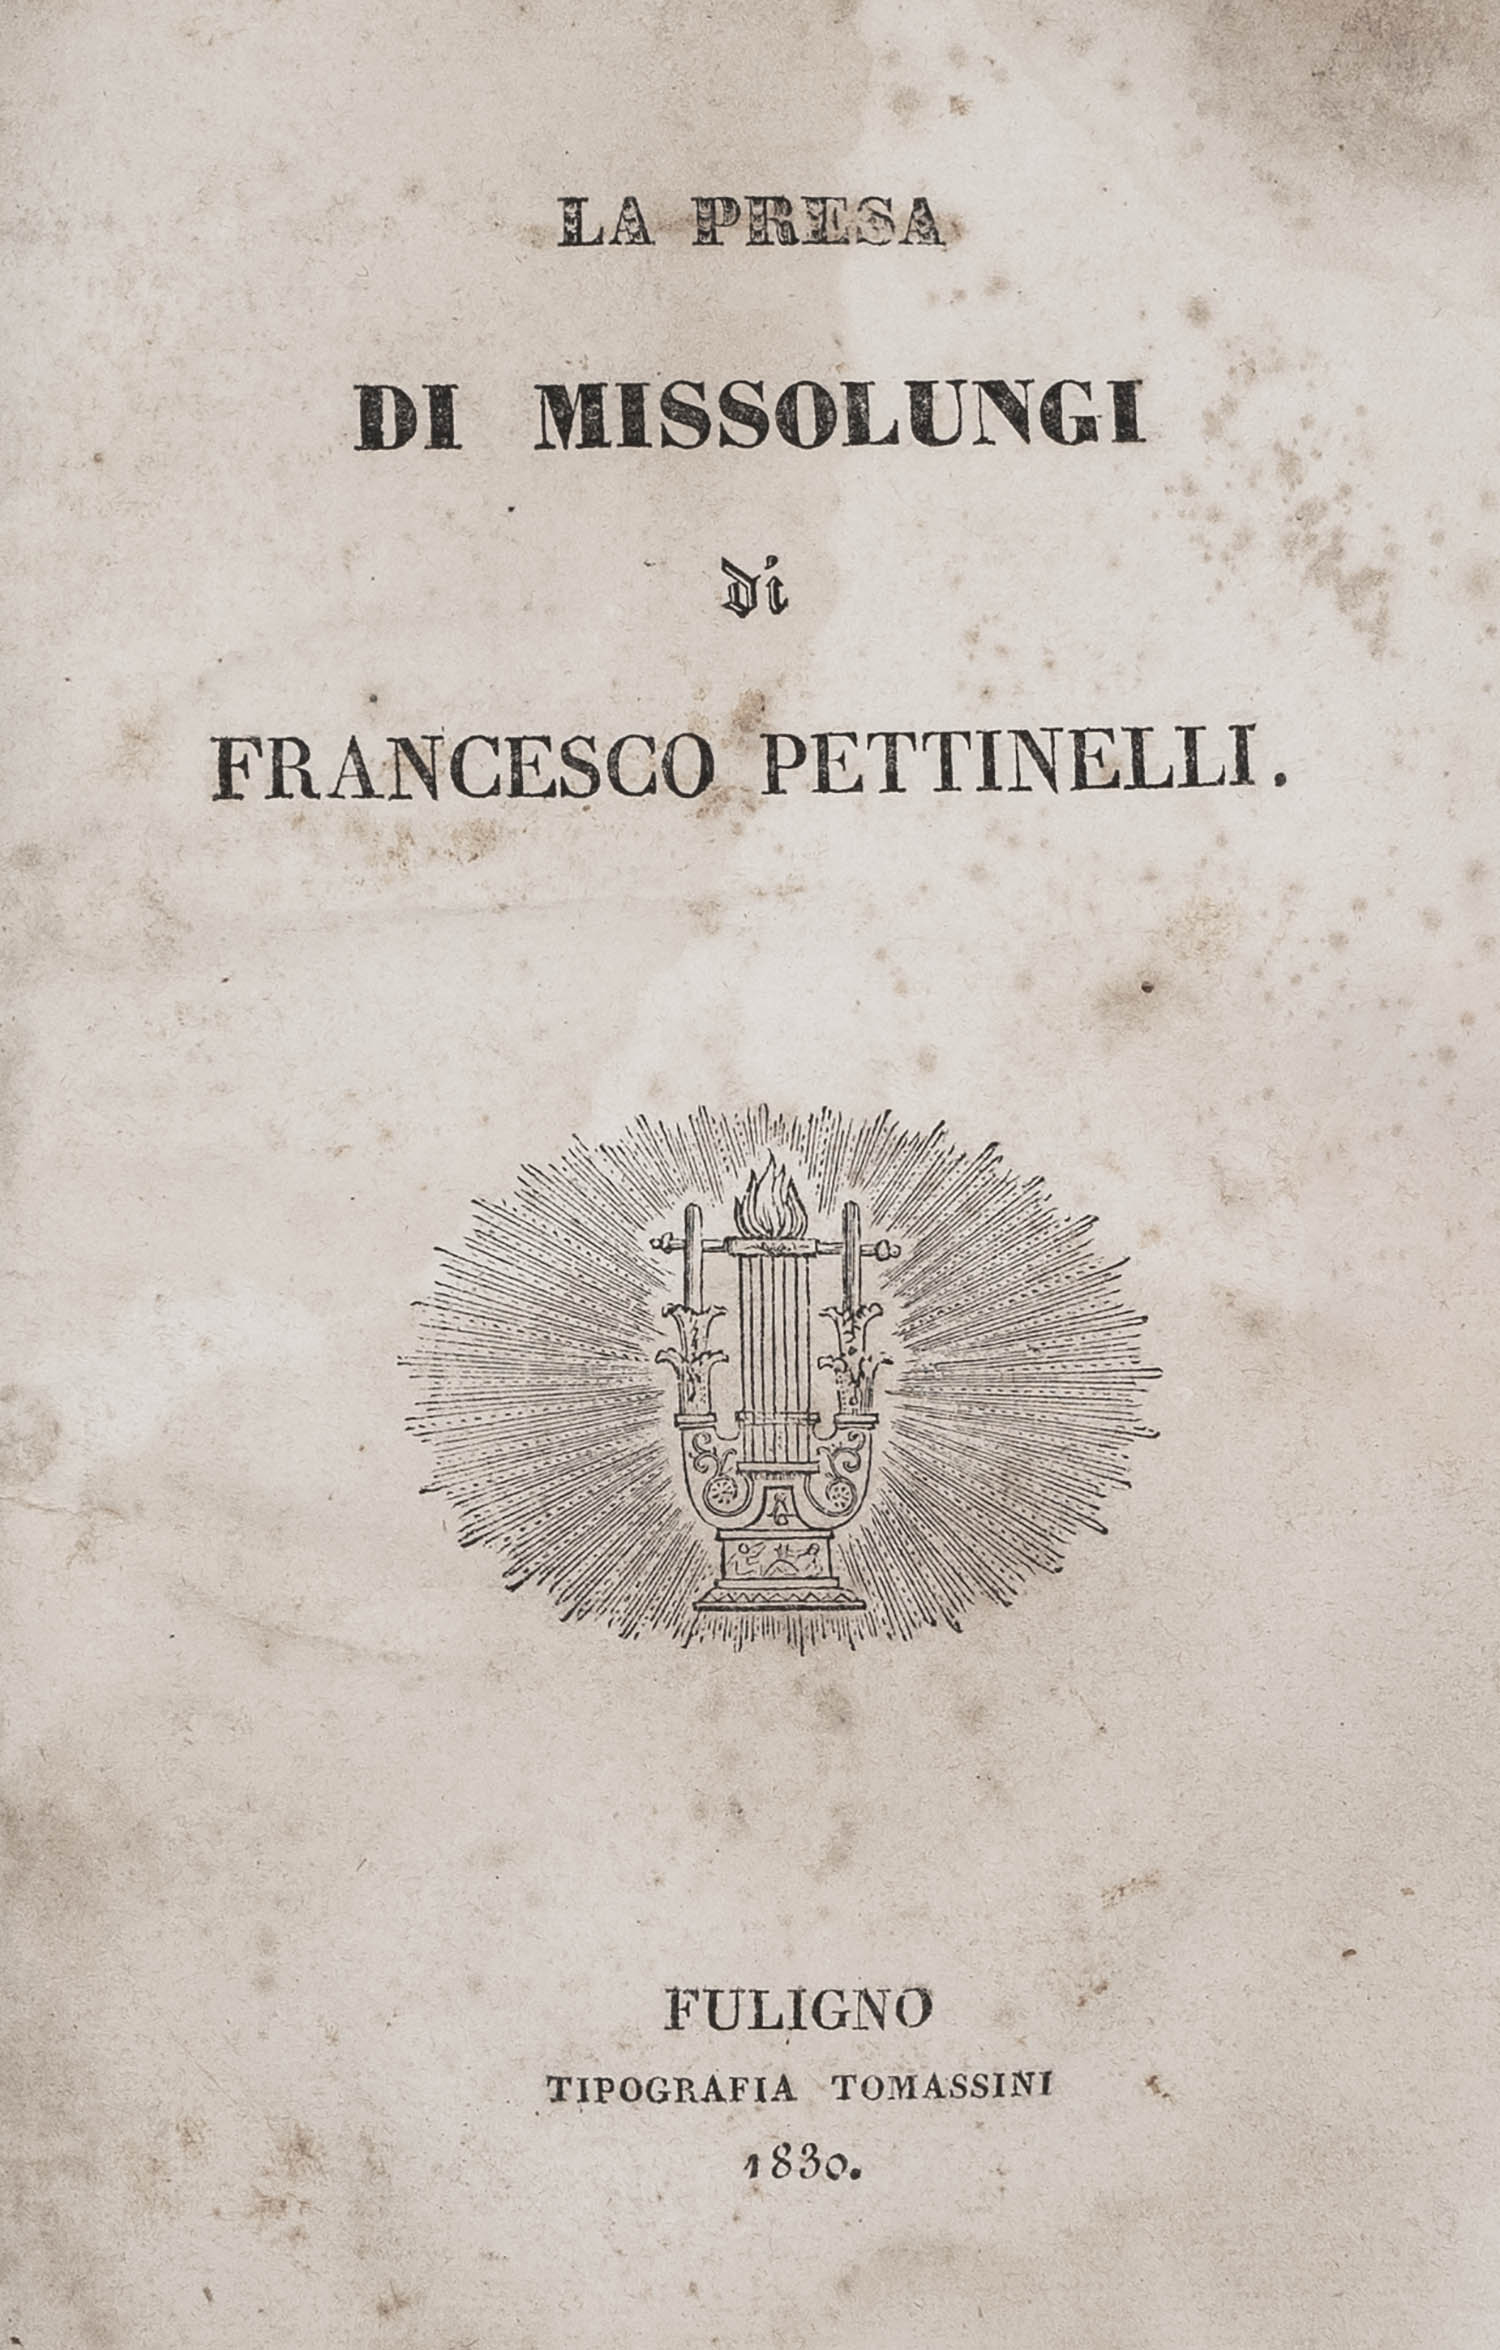 PETTINELLI, Francesco.